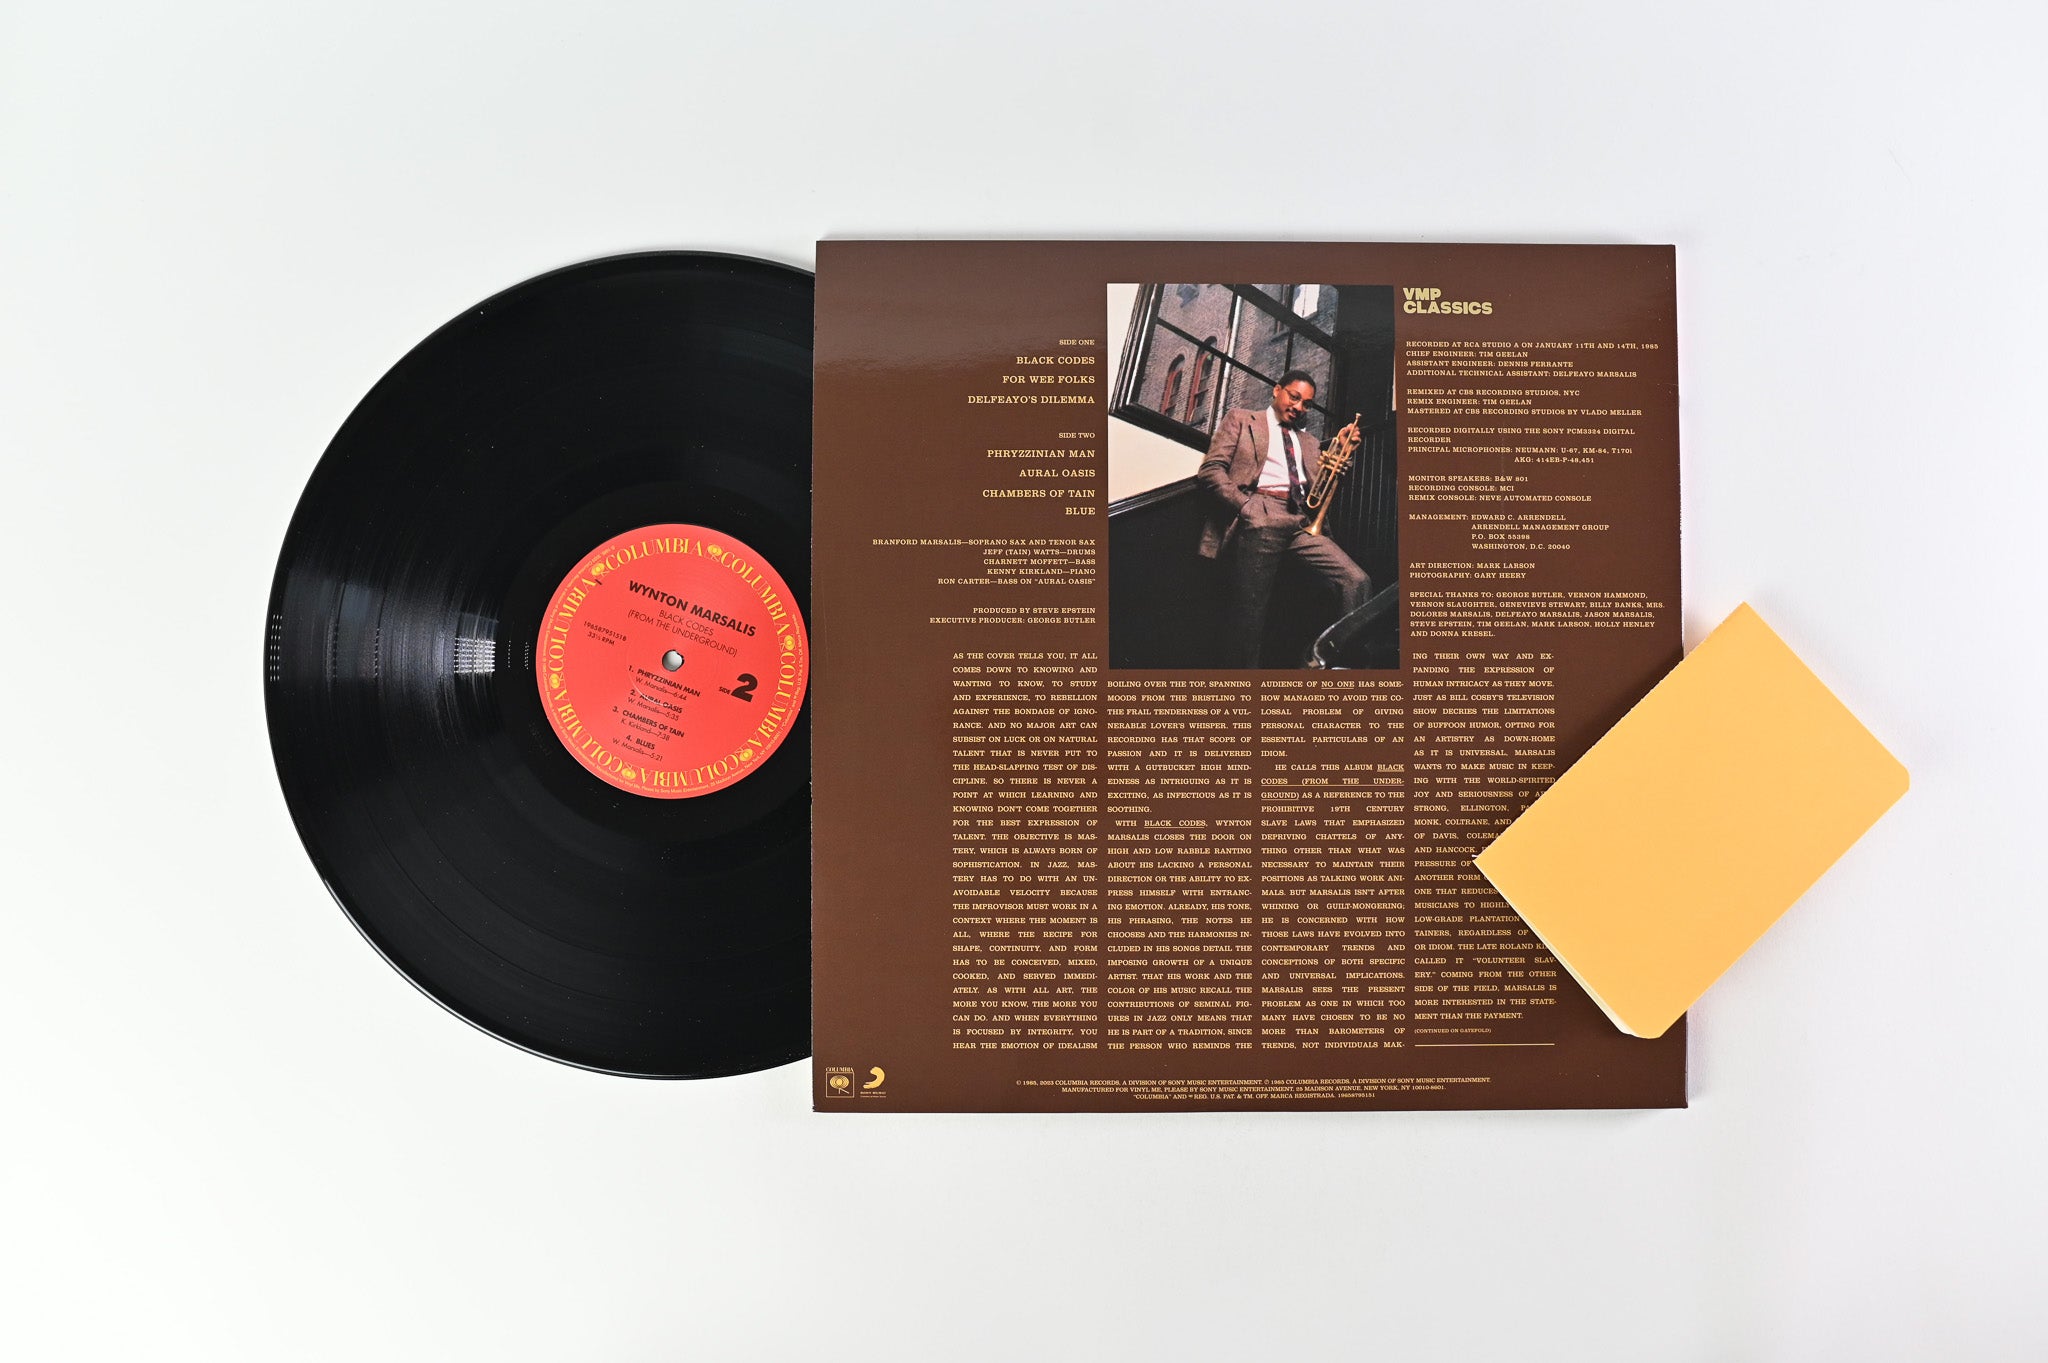 Wynton Marsalis - Black Codes (From The Underground) Reissue on Columbia, Vinyl Me Please Club Edition